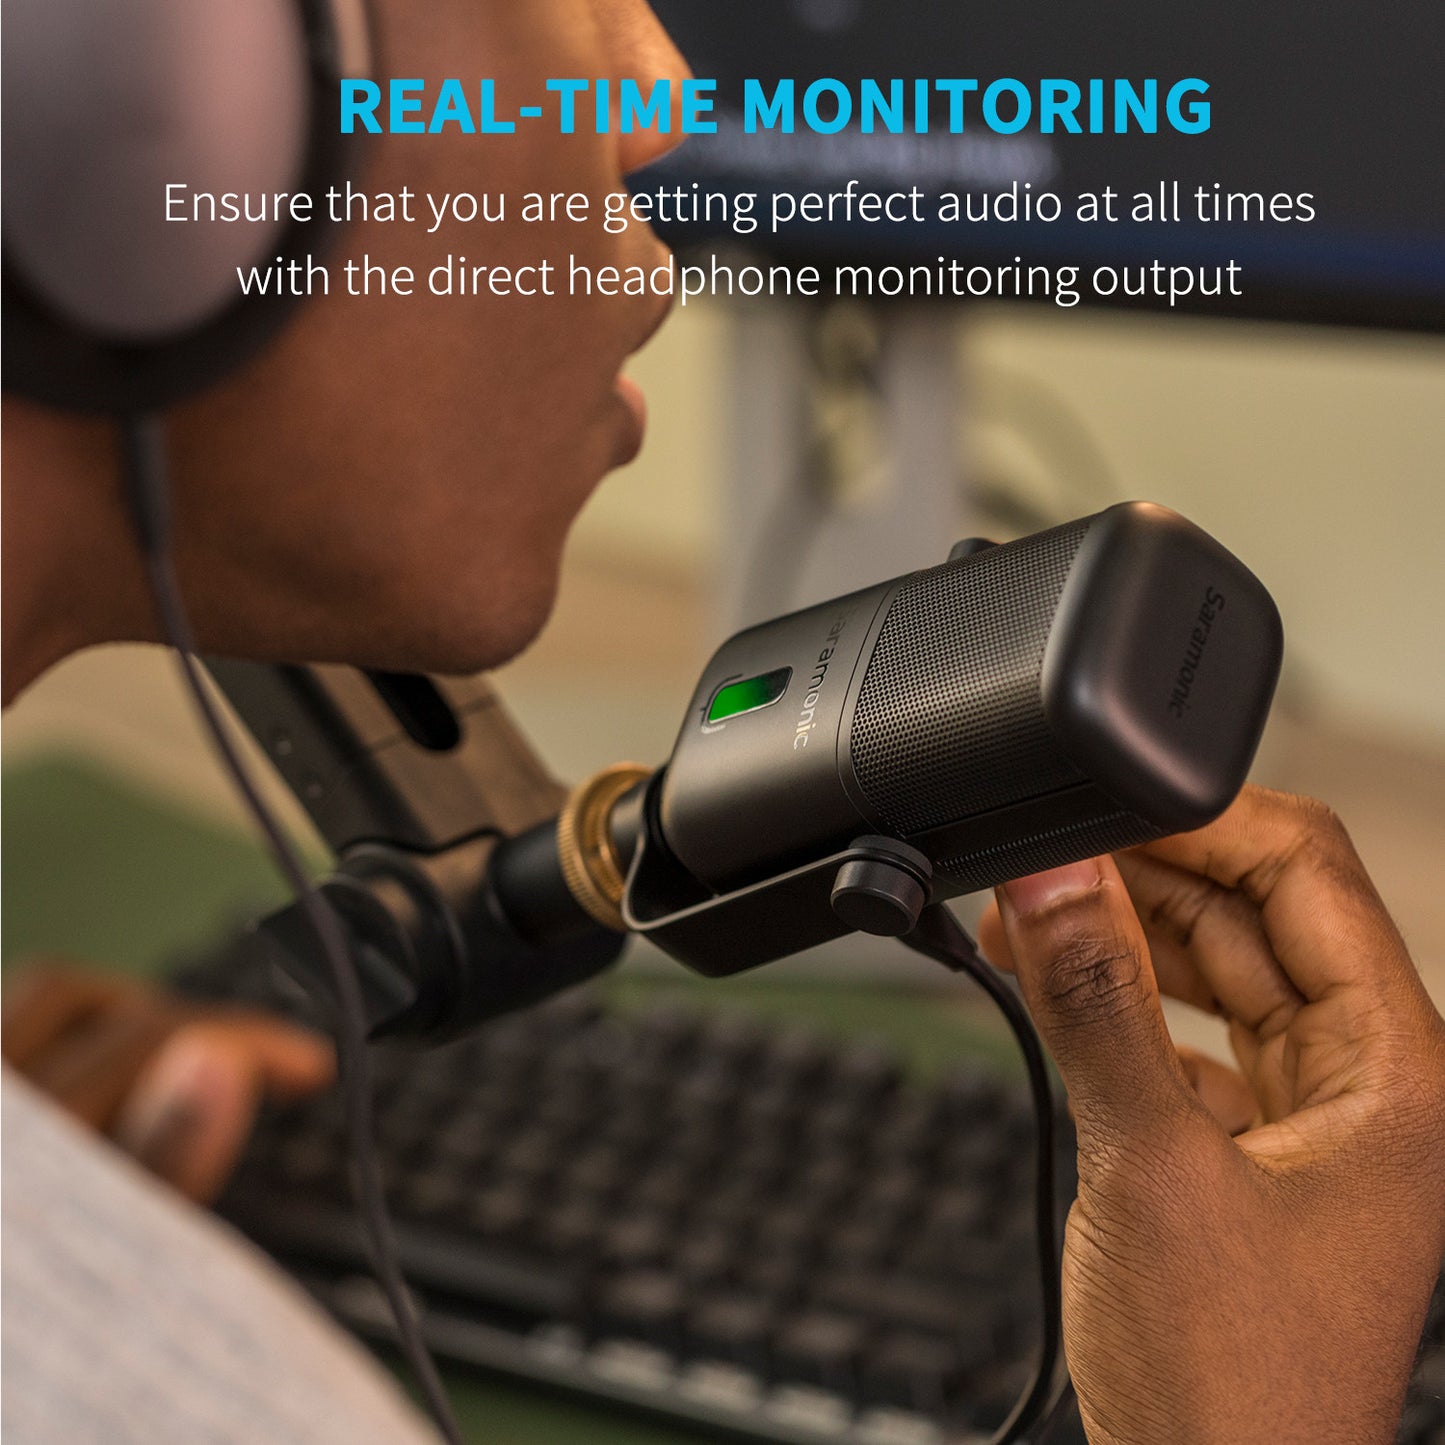 Saramonic SR-MV2000 USB Microphone Multicolor Real-time monitoring Integrated 360-degree design